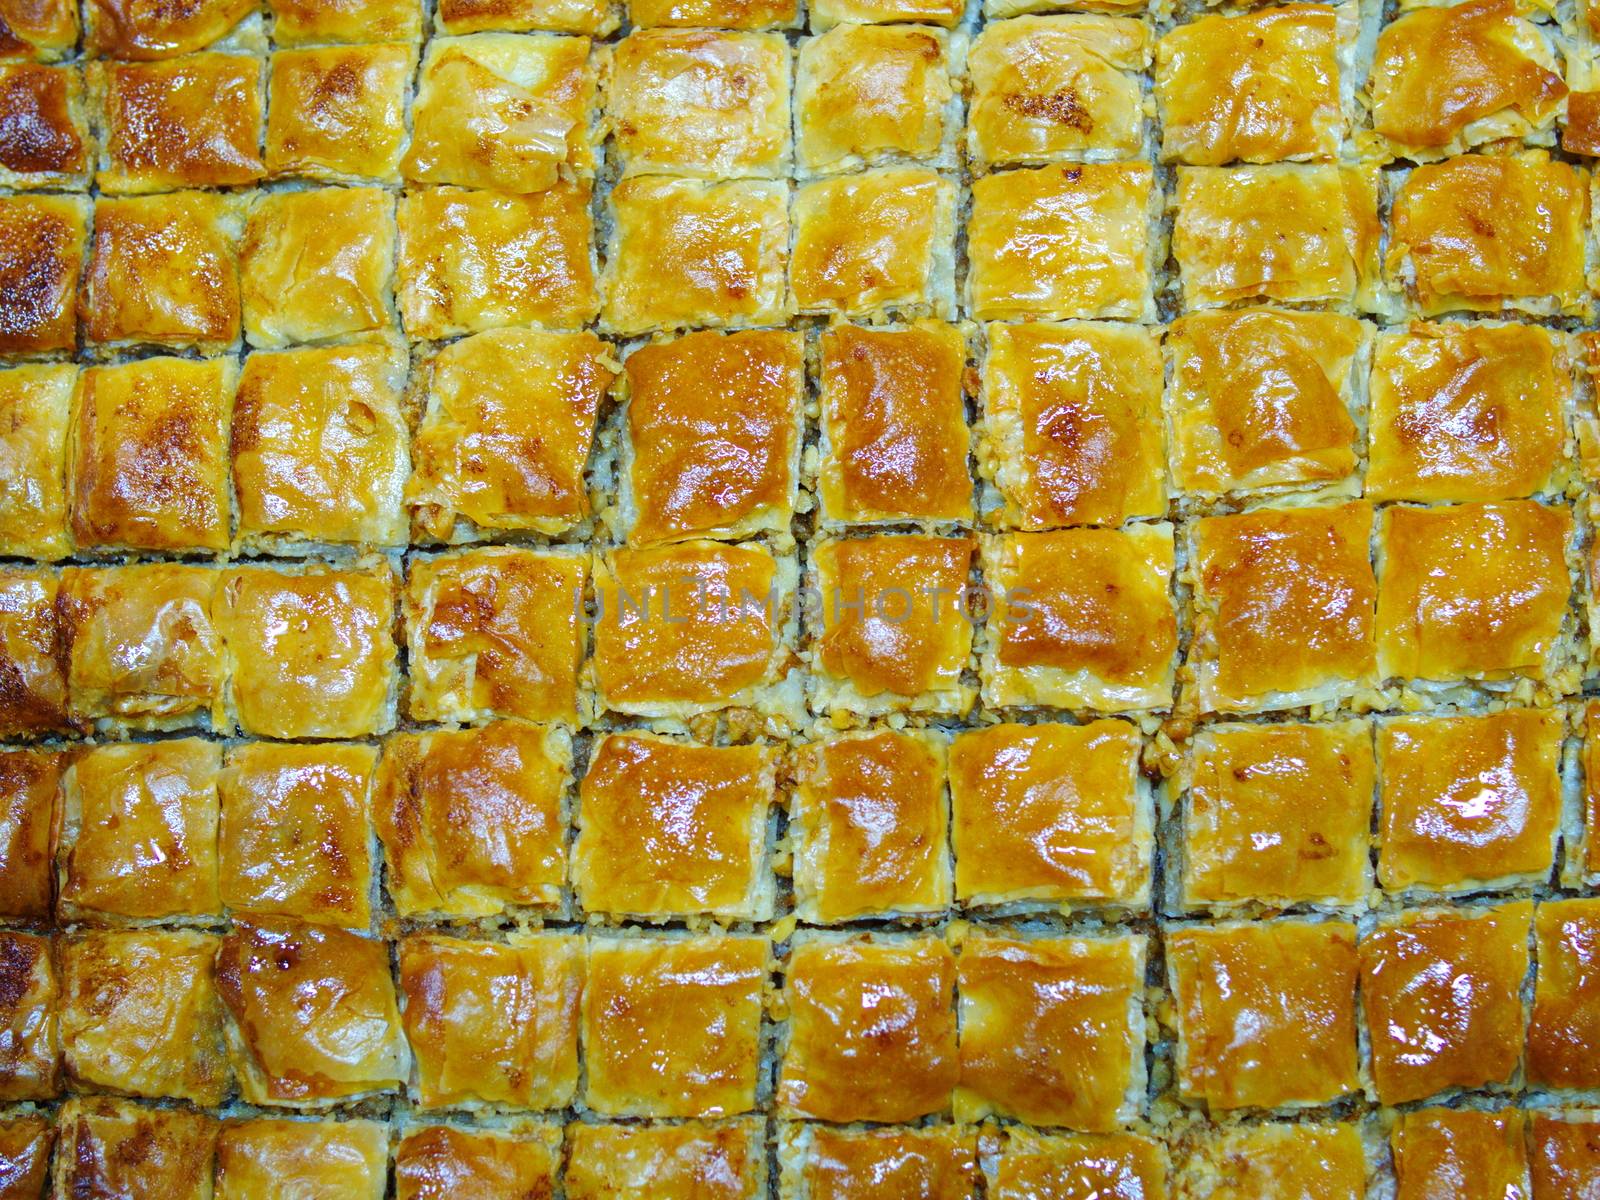 yummy, buttery, walnut home baklava. traditional Turkish dessert. "Gaziantep baklava"